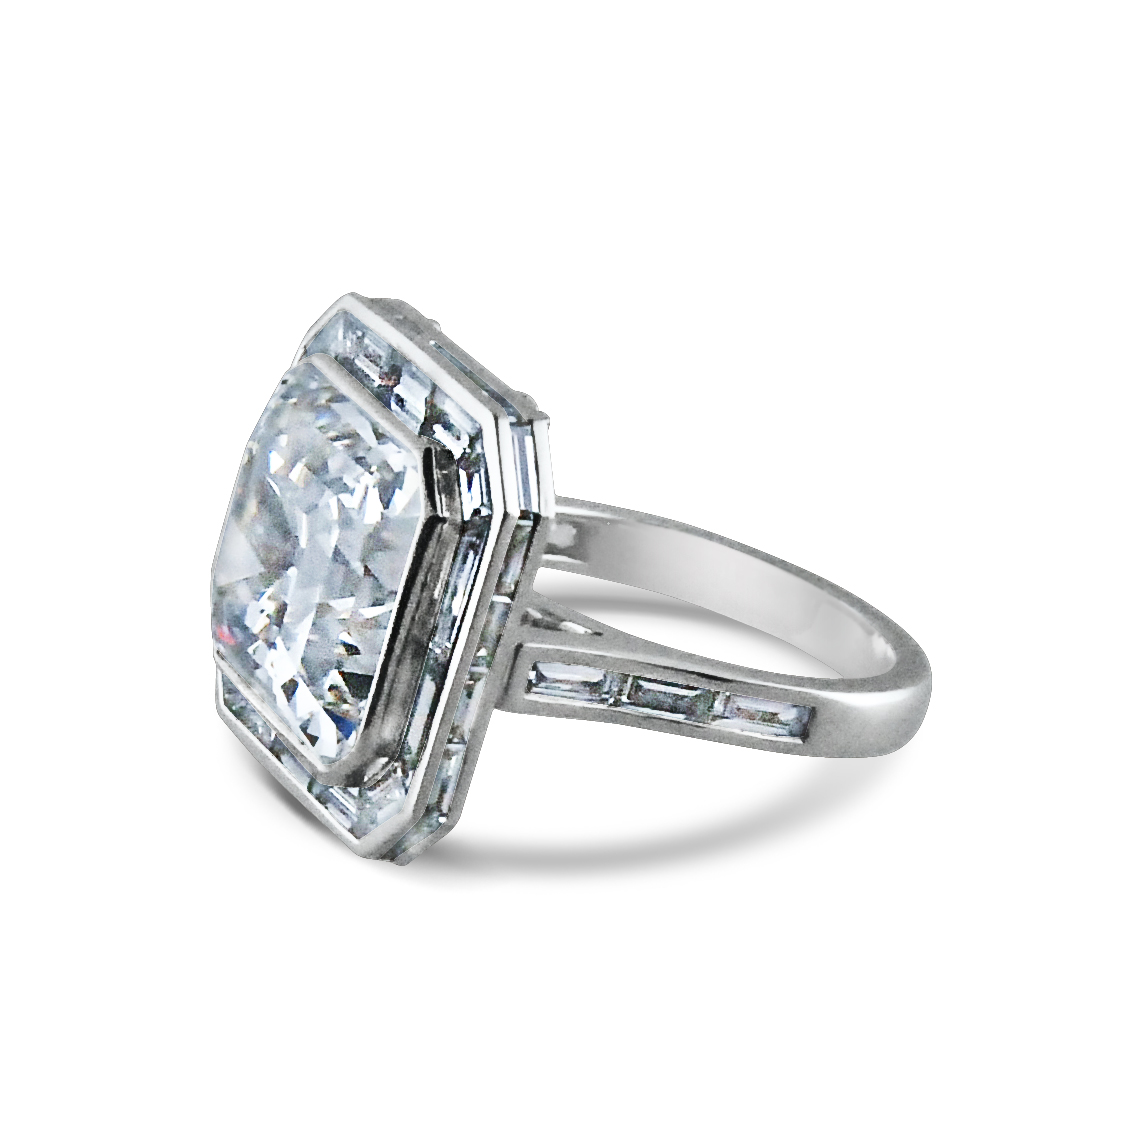 10.62ct-step-cut-diamond-and-platinum-ring-1.jpg